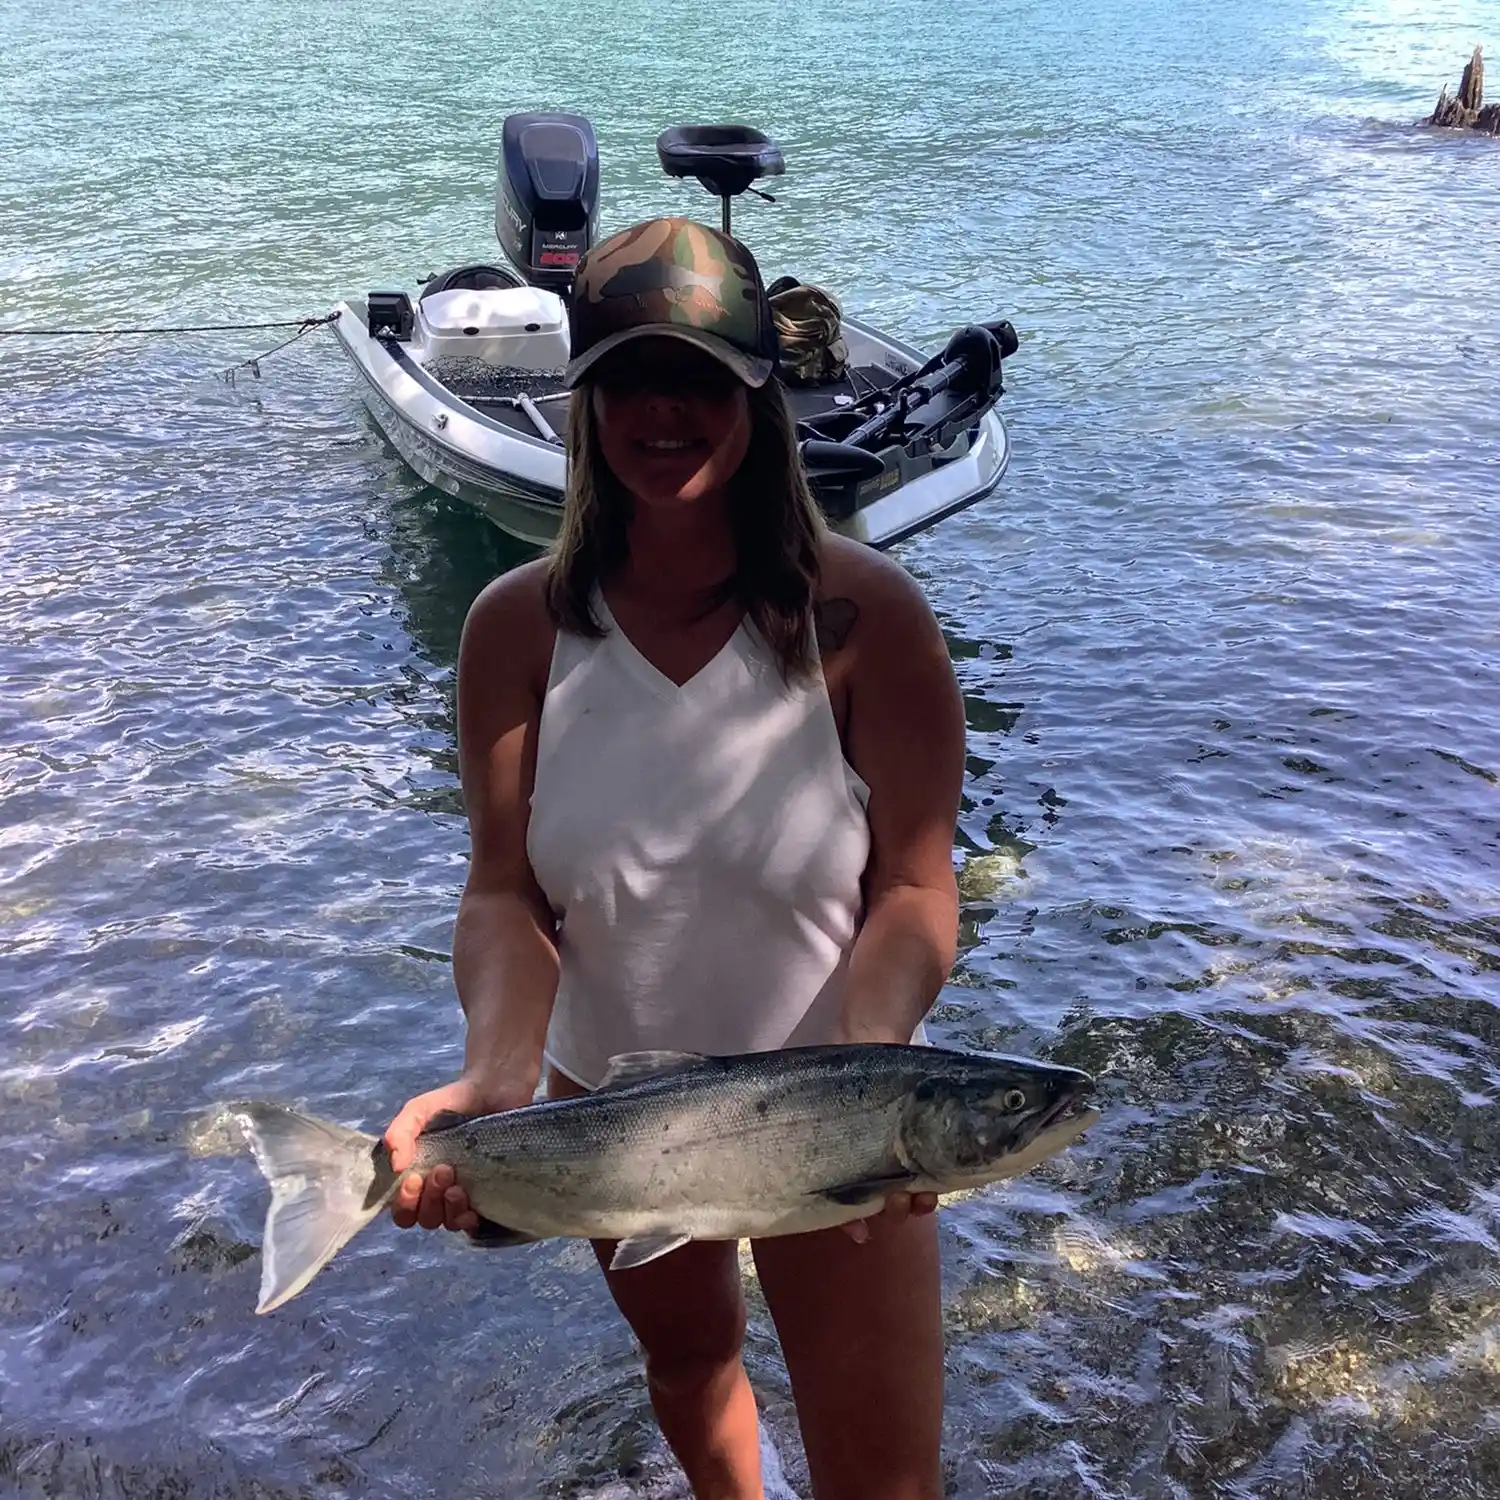 Fishing Report of the Week: Sockeye Salmon at Baker Lake